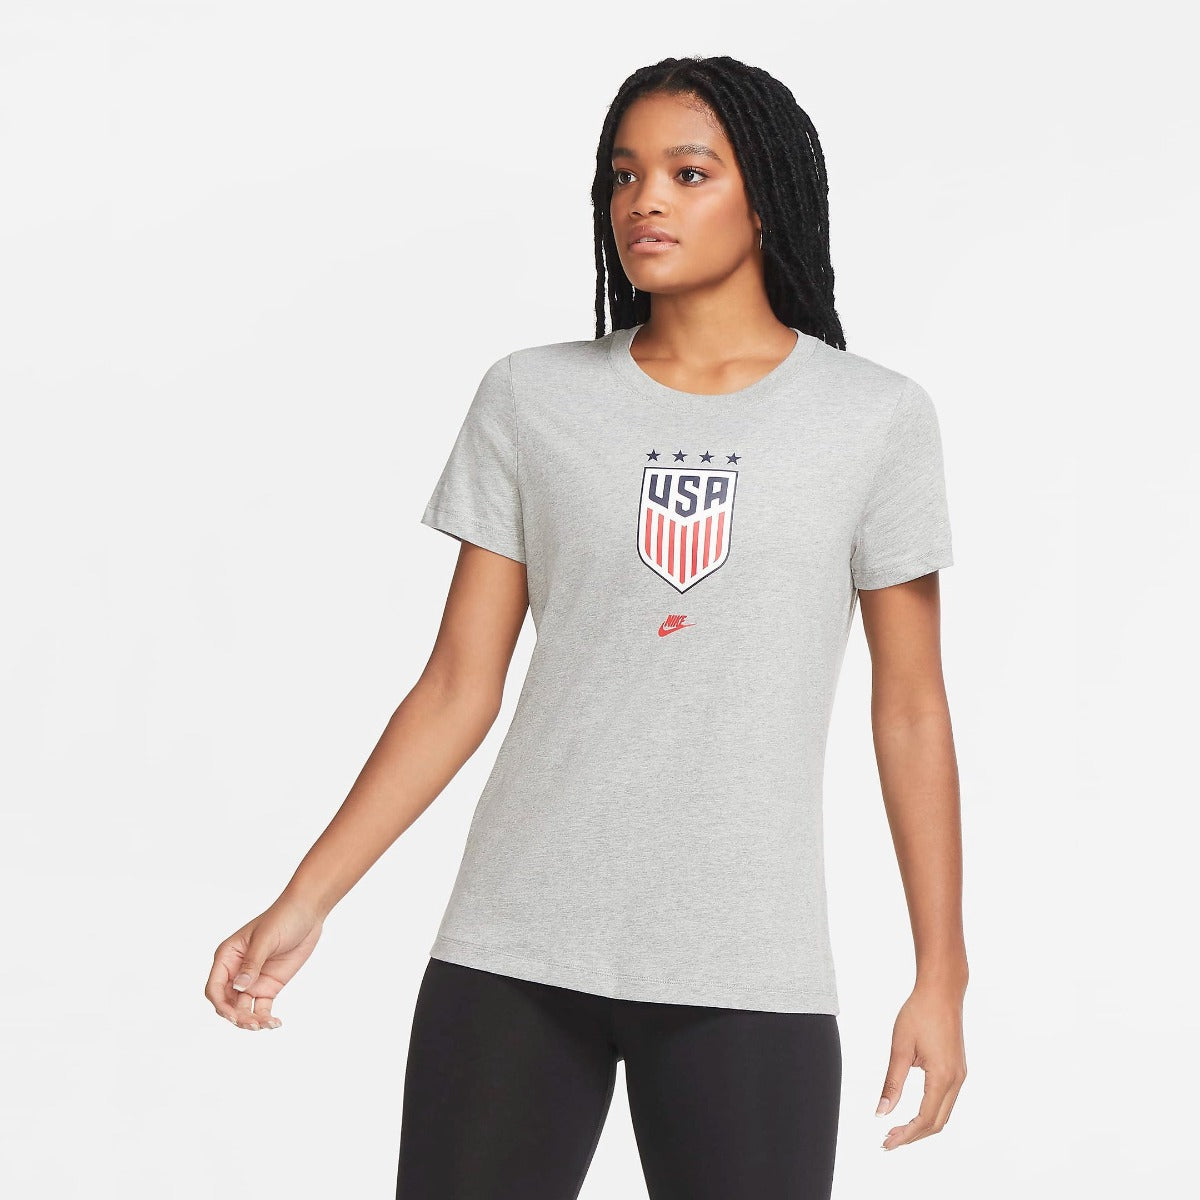 Nike, Nike 2020-21 USA donne 4 Star Crest Tee - Grigio